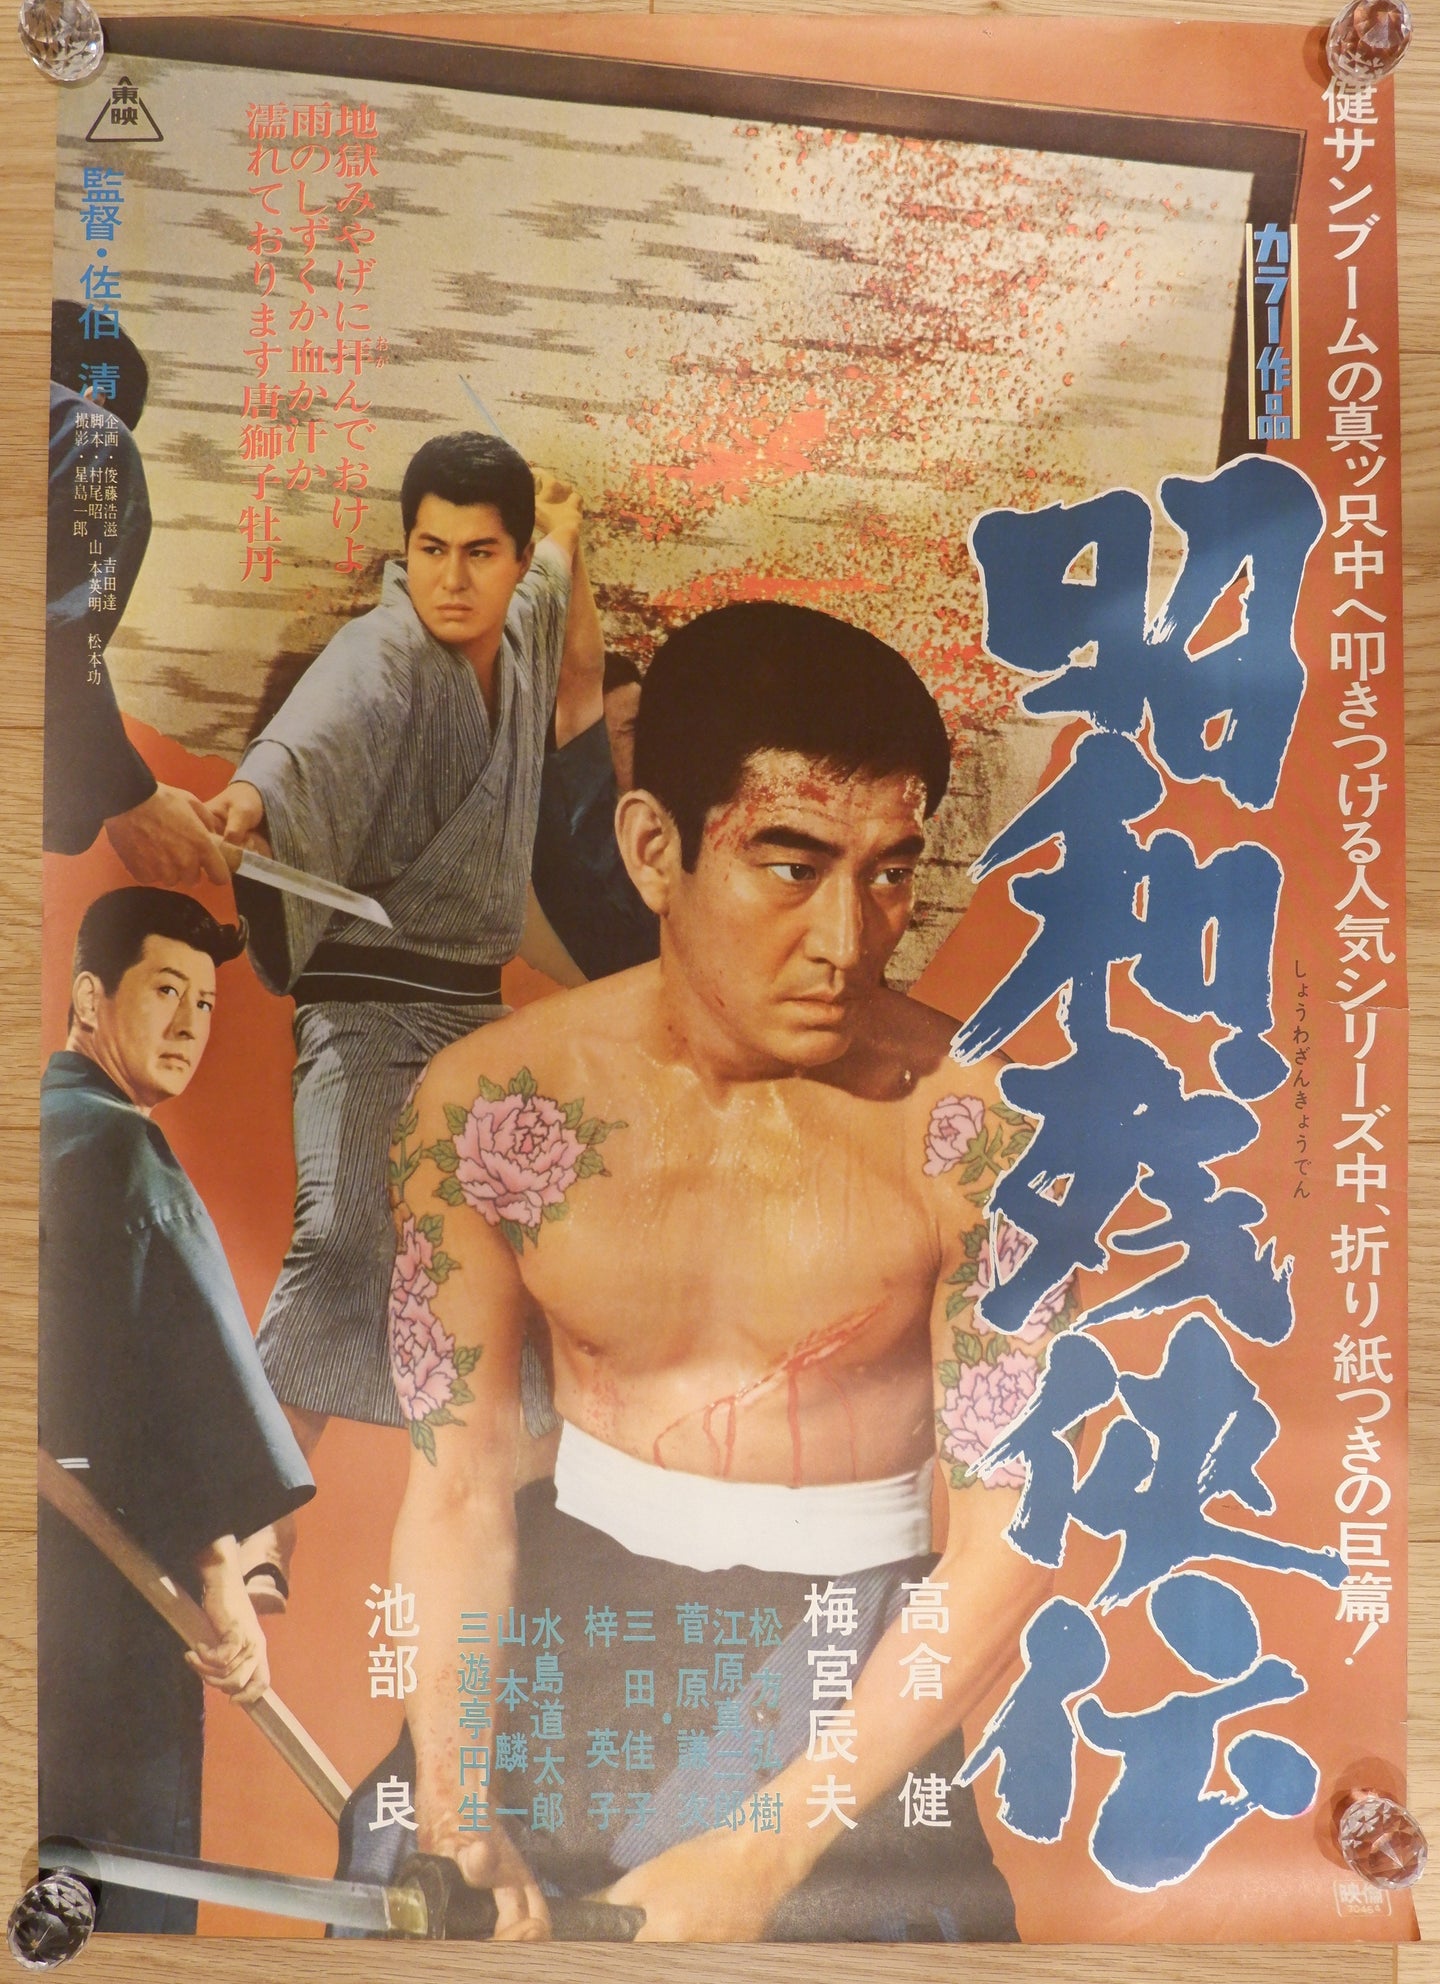 Tales of the Last Showa Yakuza 7, Original Release Japanese Movie Poster 1970, Ken Takakura, B2 Size